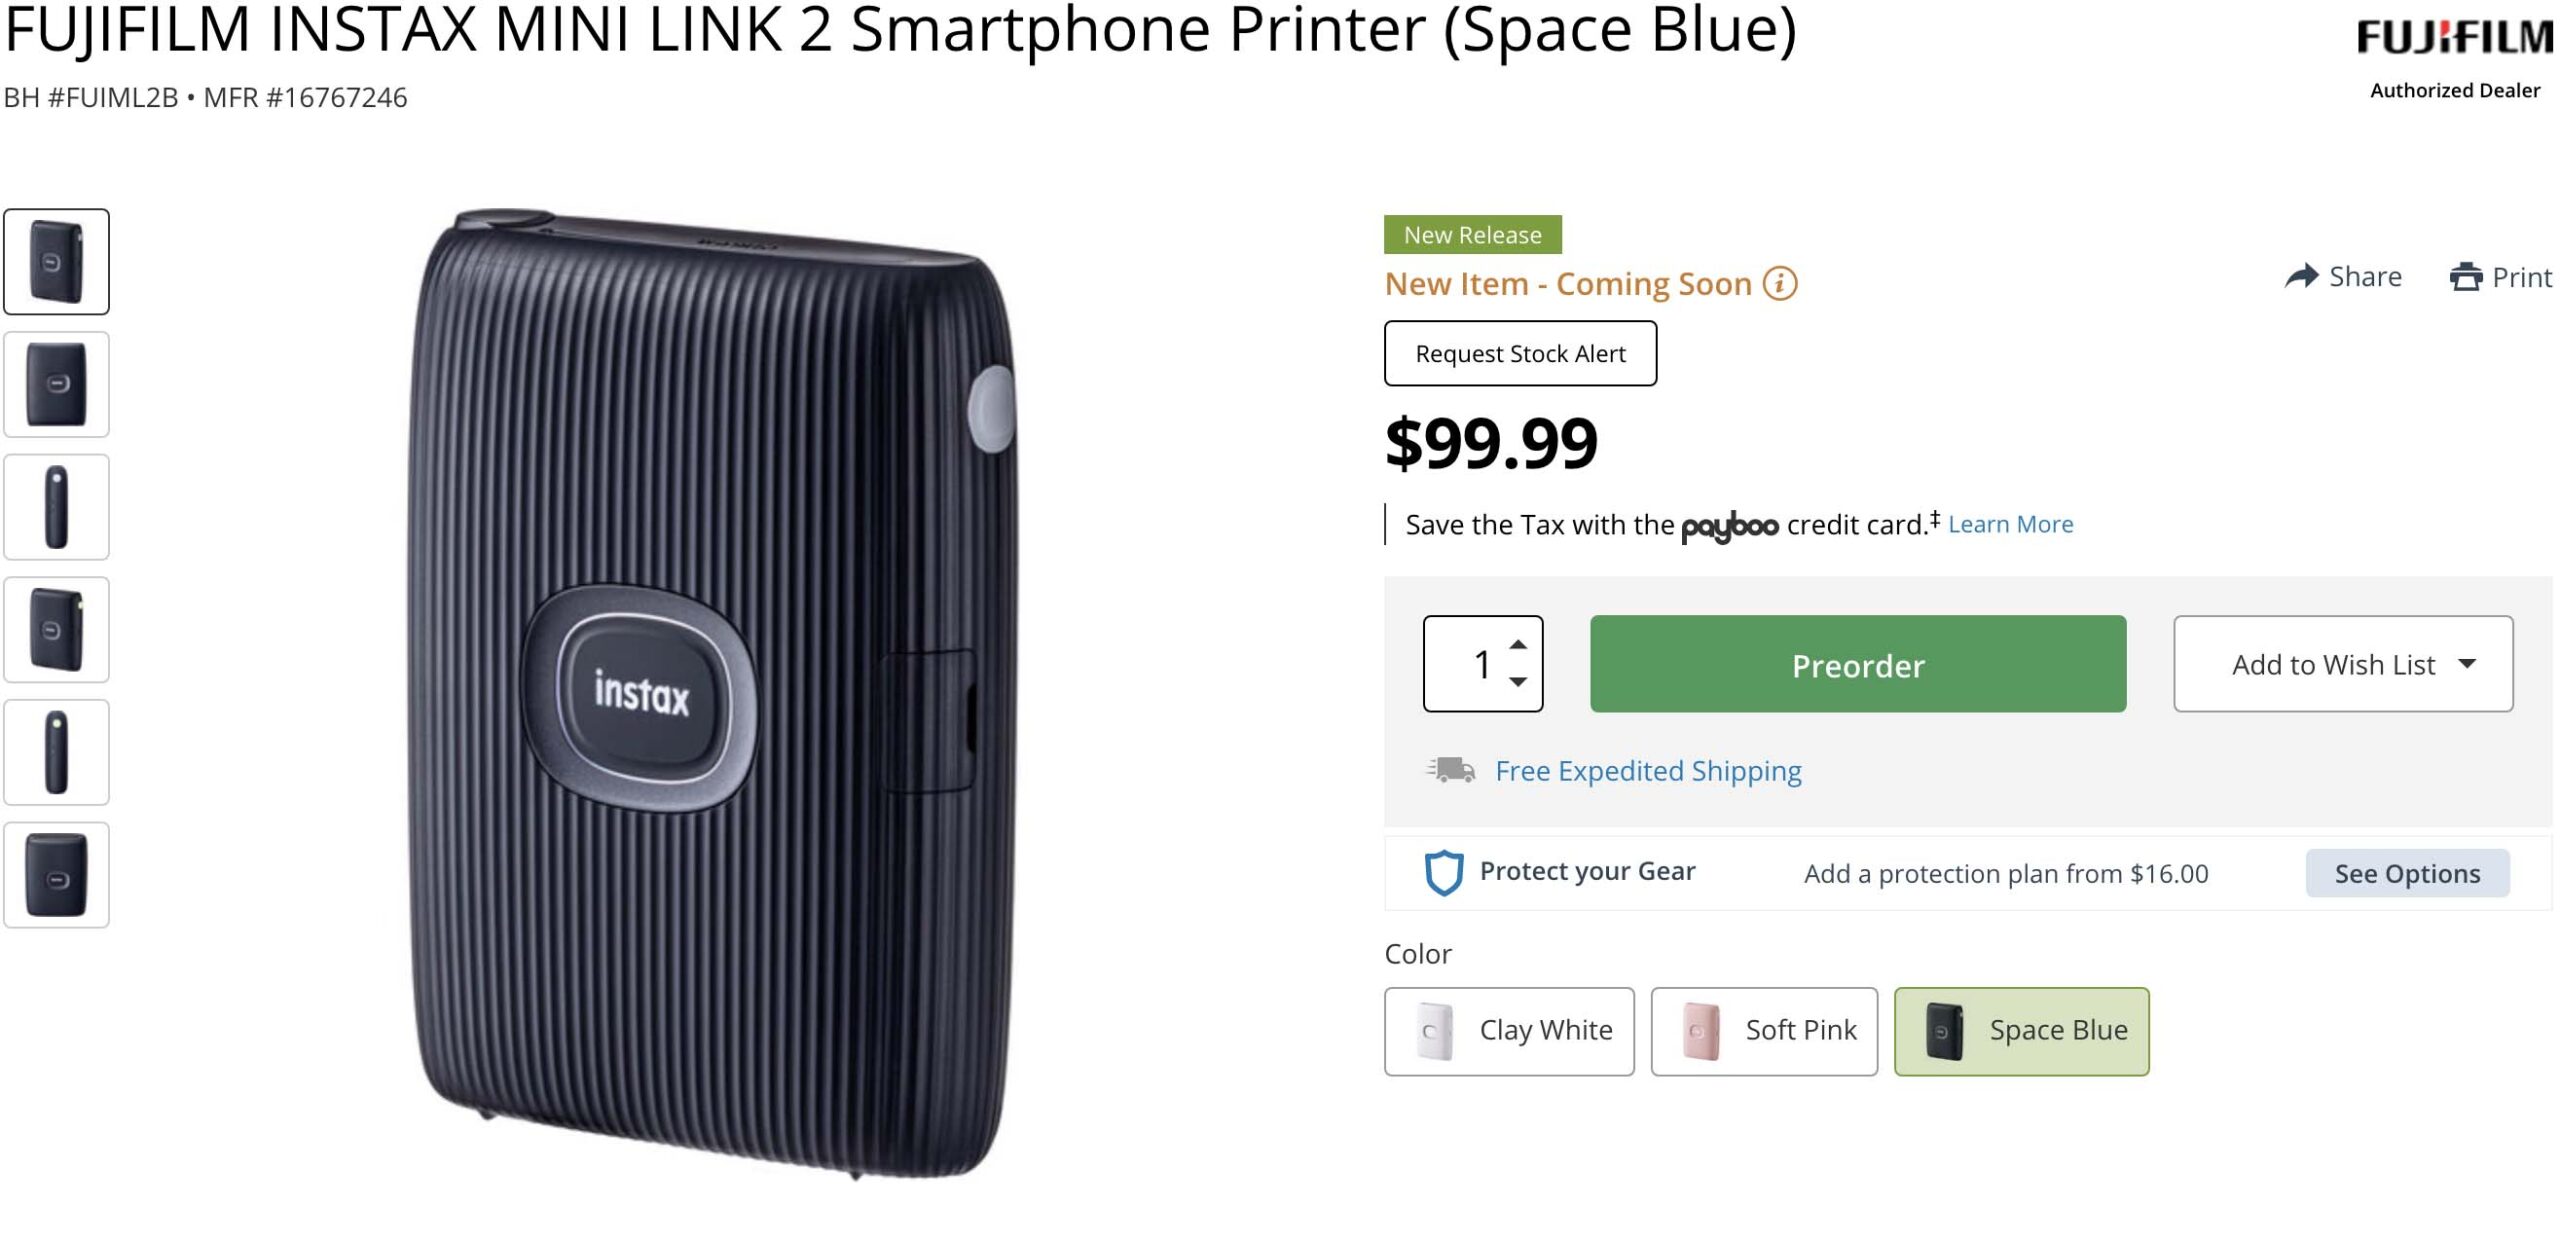 FUJIFILM INSTAX MINI LINK 2 Smartphone Printer (Space Blue) with